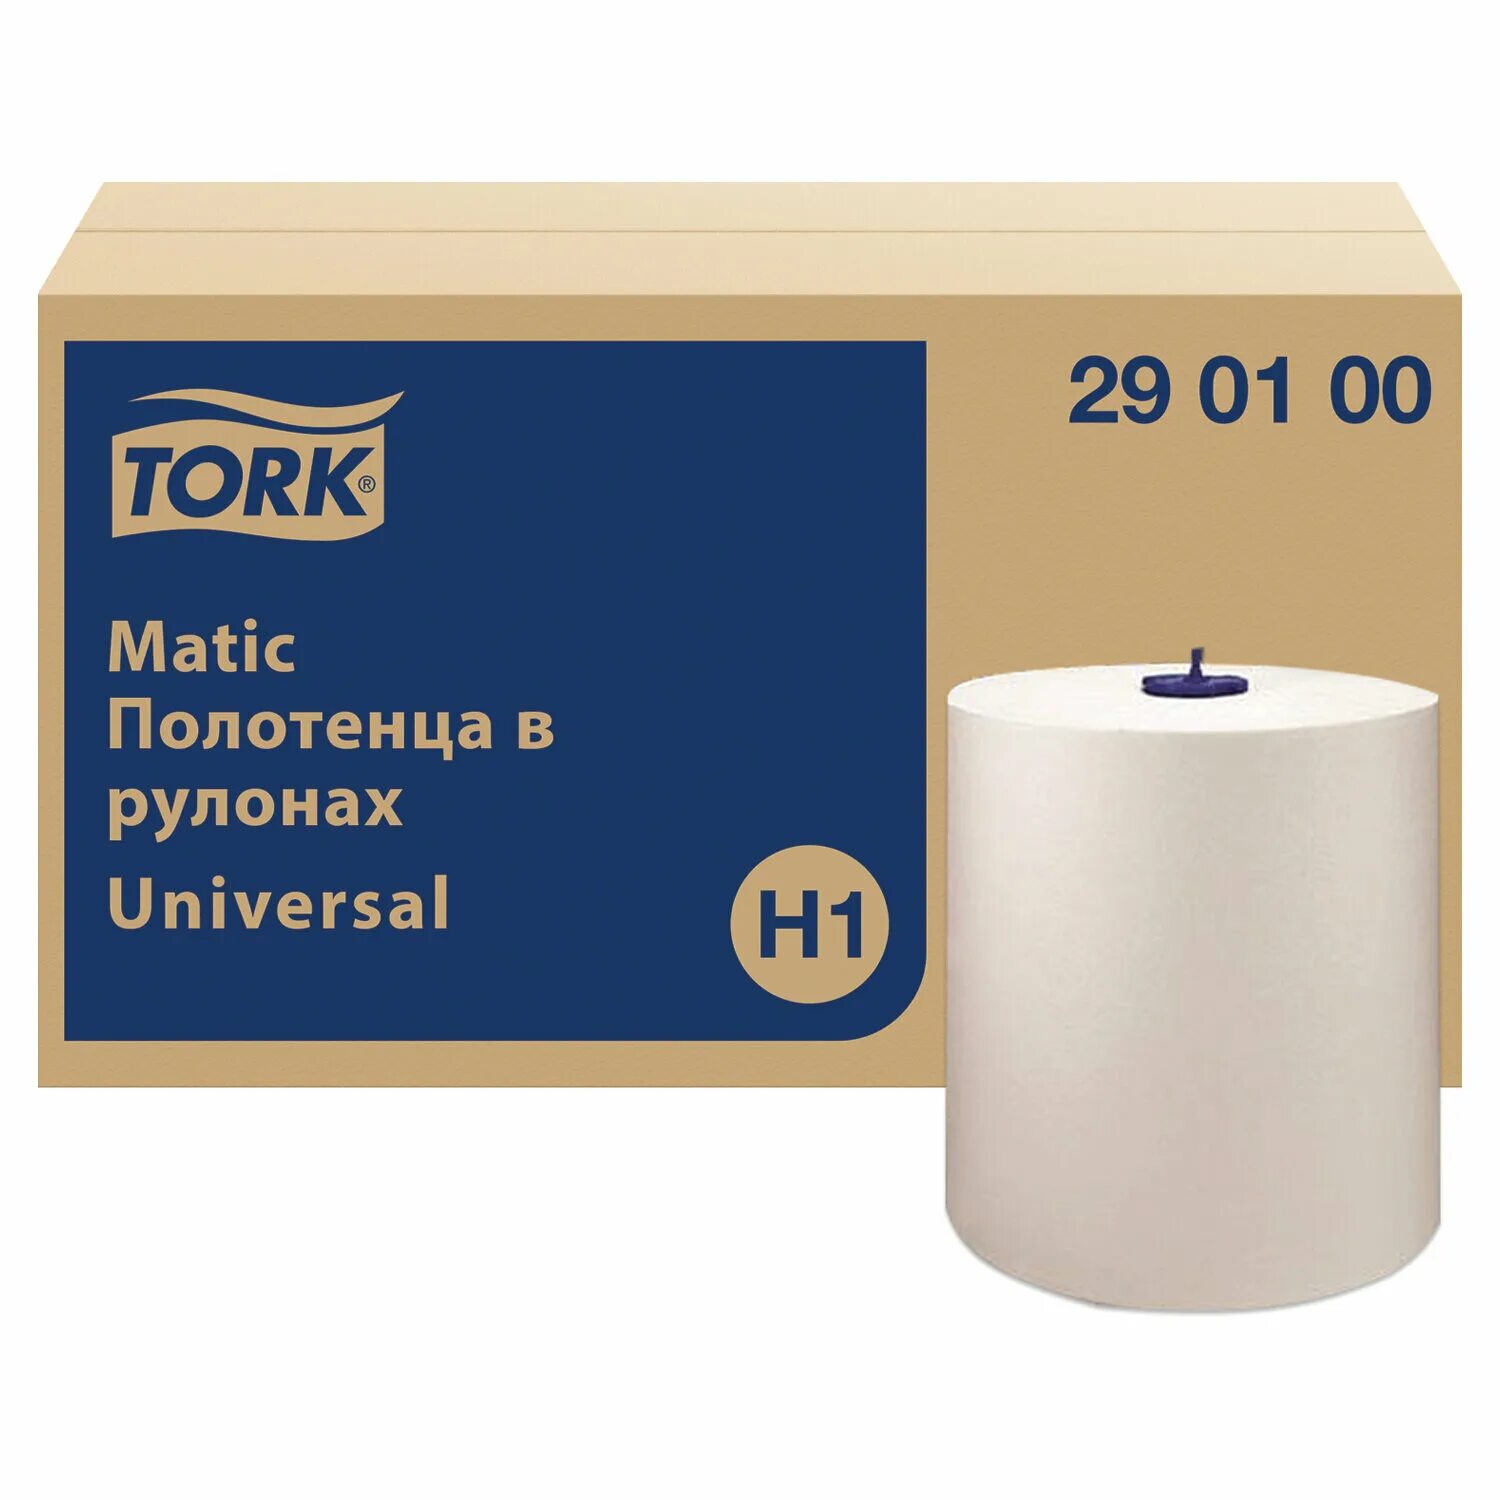 Полотенца tork matic. Бумажные полотенца торк h1. 290100 Торк. Tork матик 1сл. Полотенца бумажные в рулоне Tork Universal 290059, h1, 1-слойные, белые.